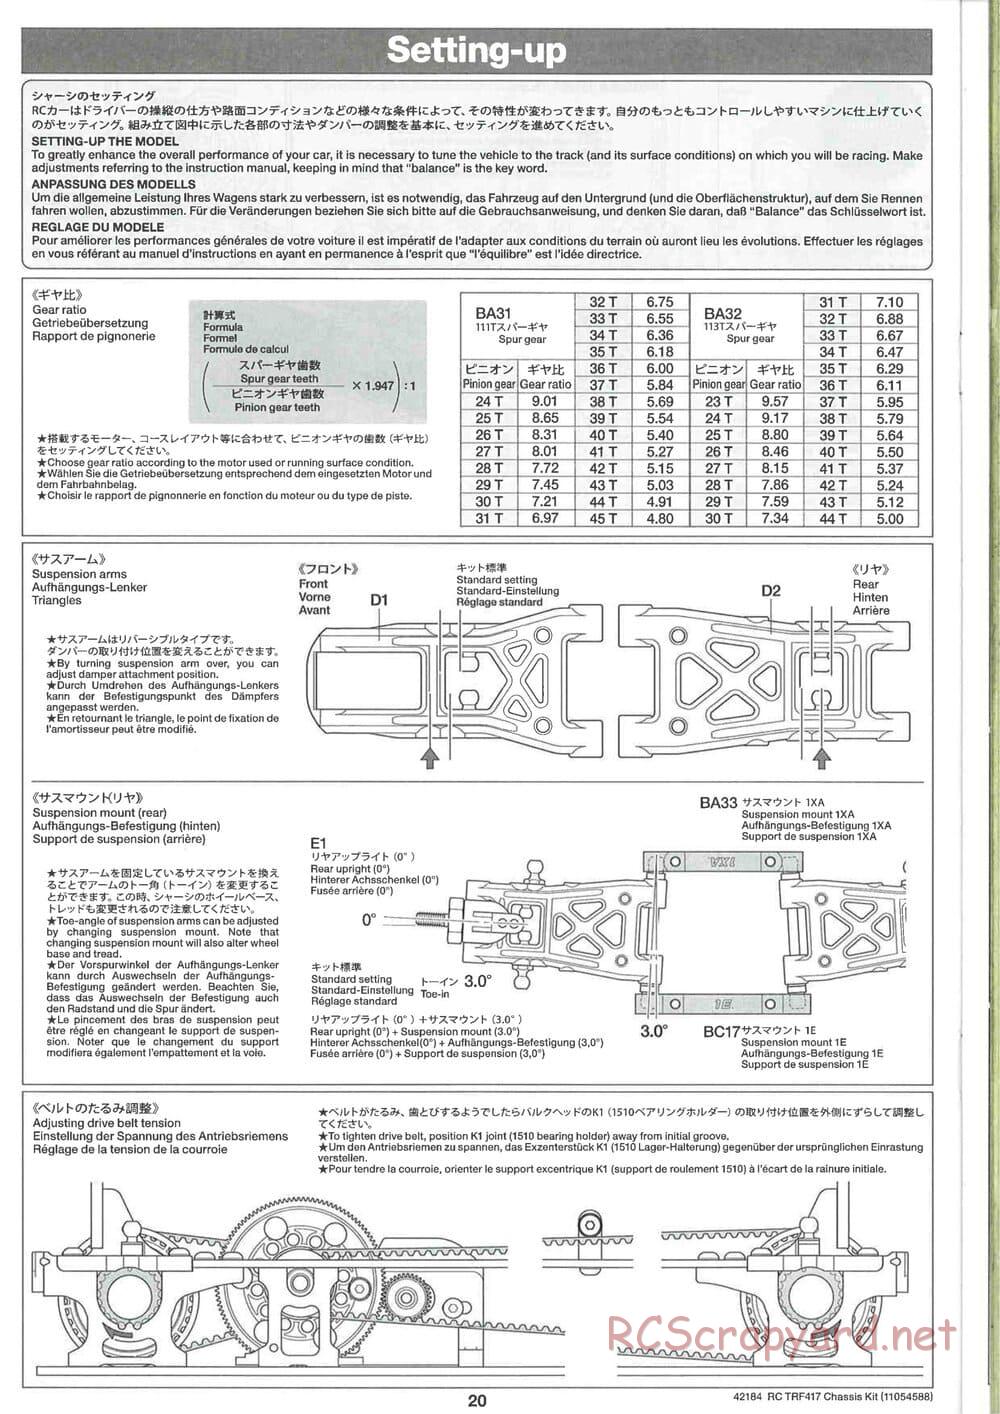 Tamiya - TRF417 Chassis - Manual - Page 20